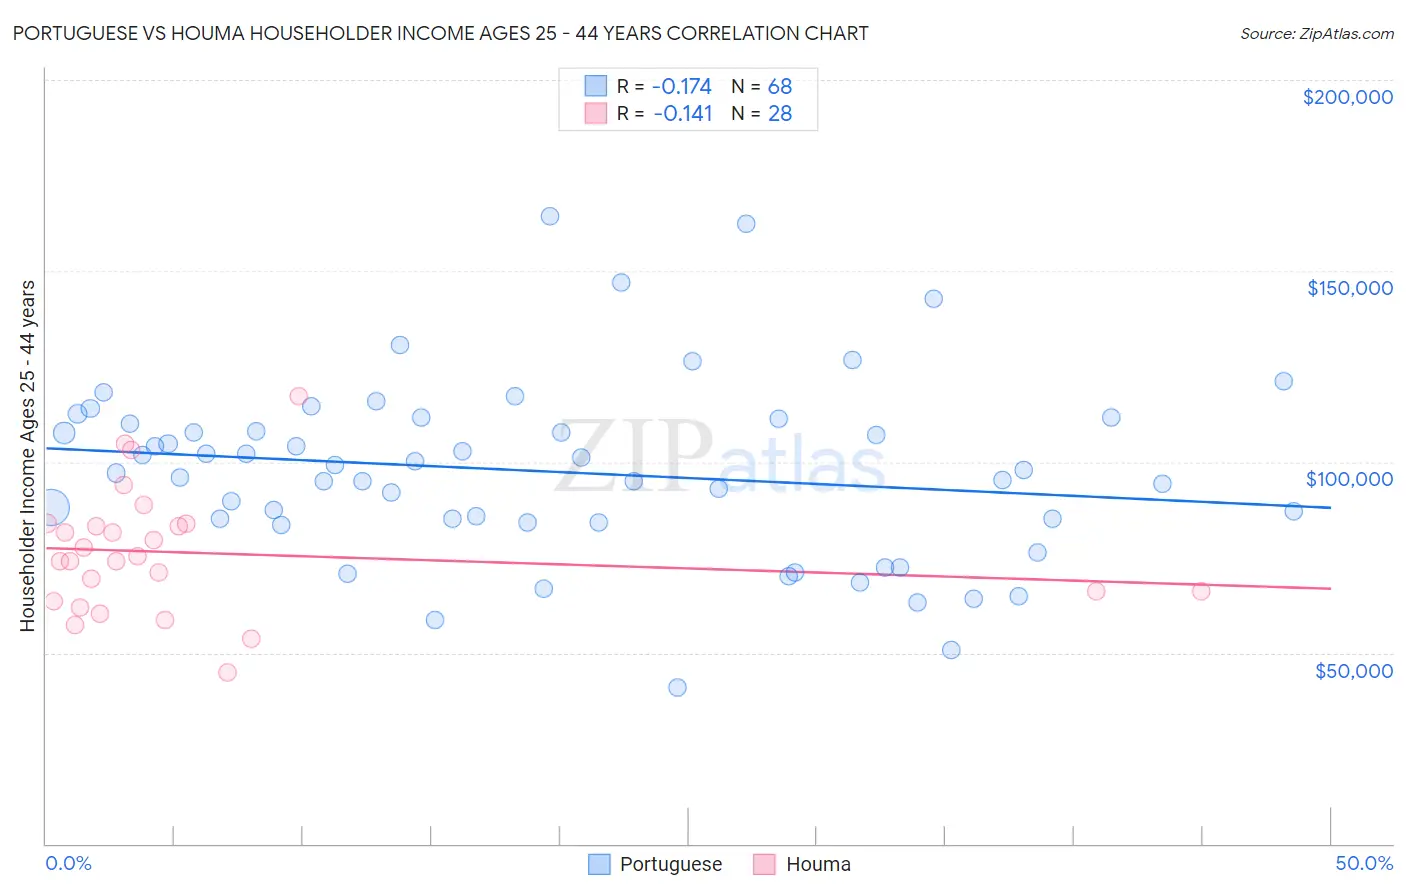 Portuguese vs Houma Householder Income Ages 25 - 44 years